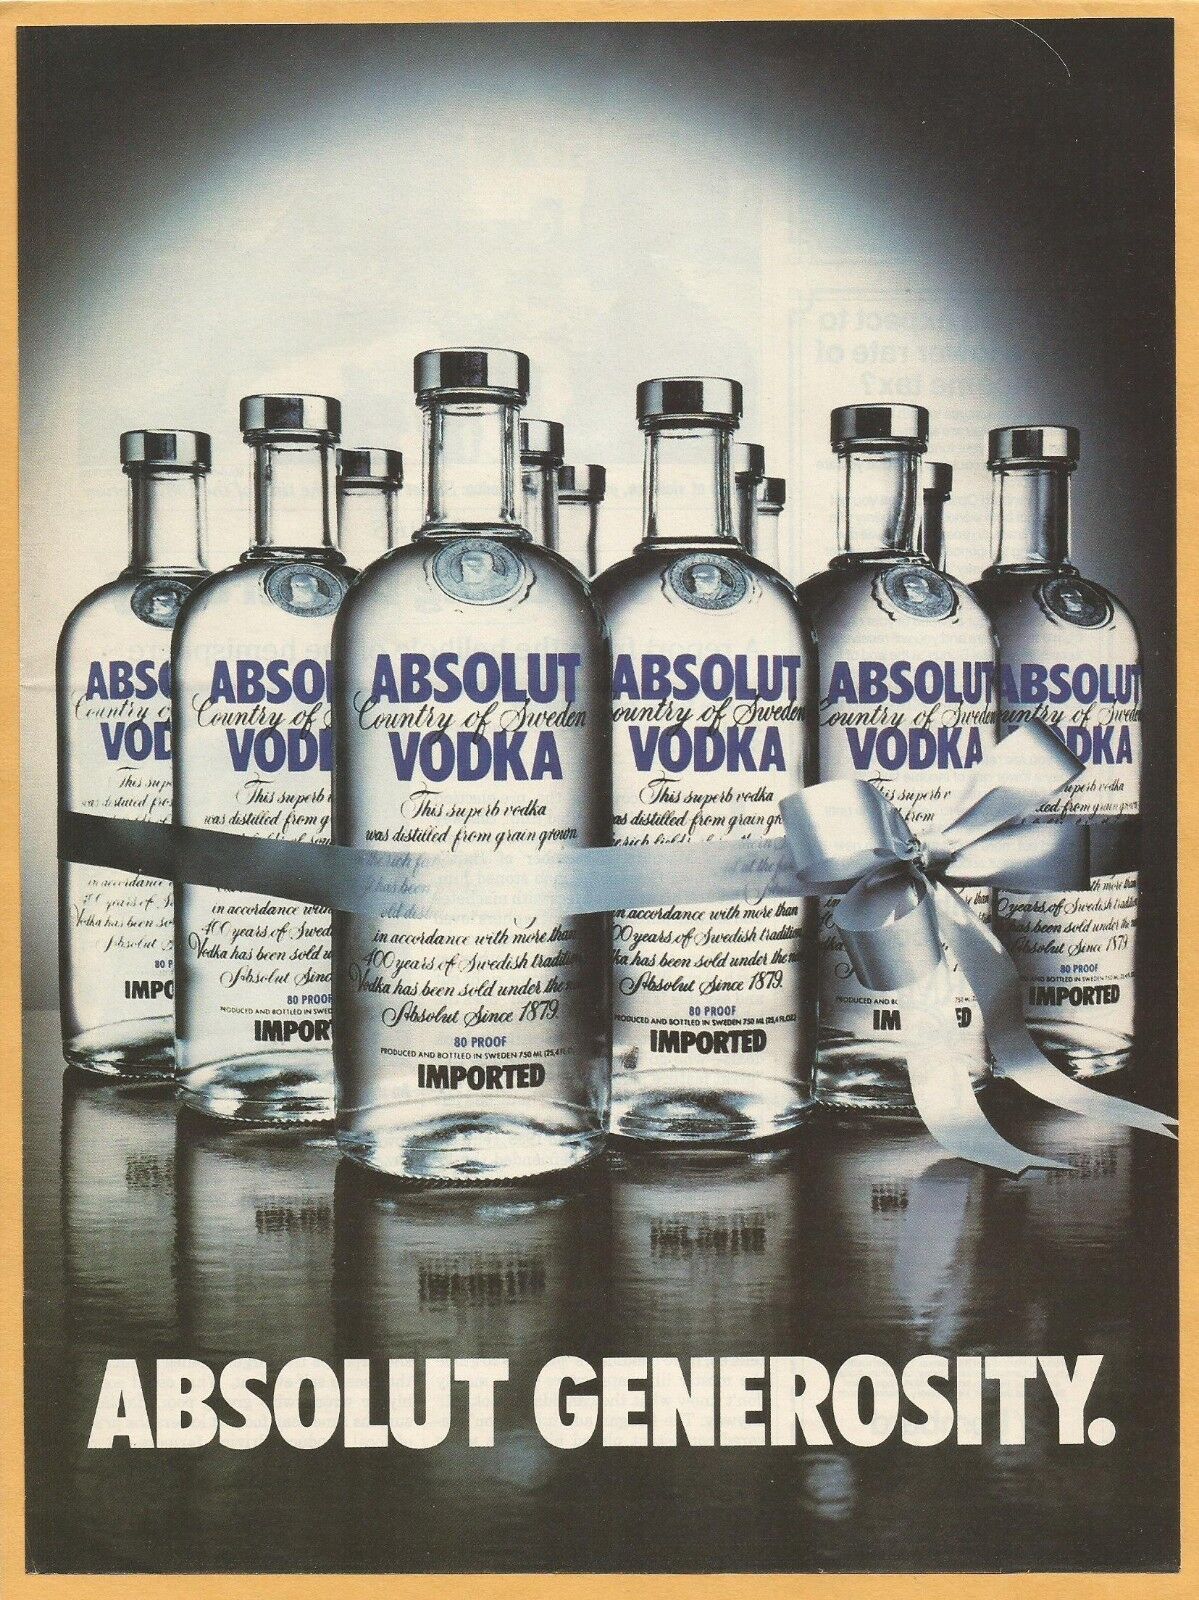 ABSOLUT VODKA - Absolut Generosity - 1989 Vintage Print Ad